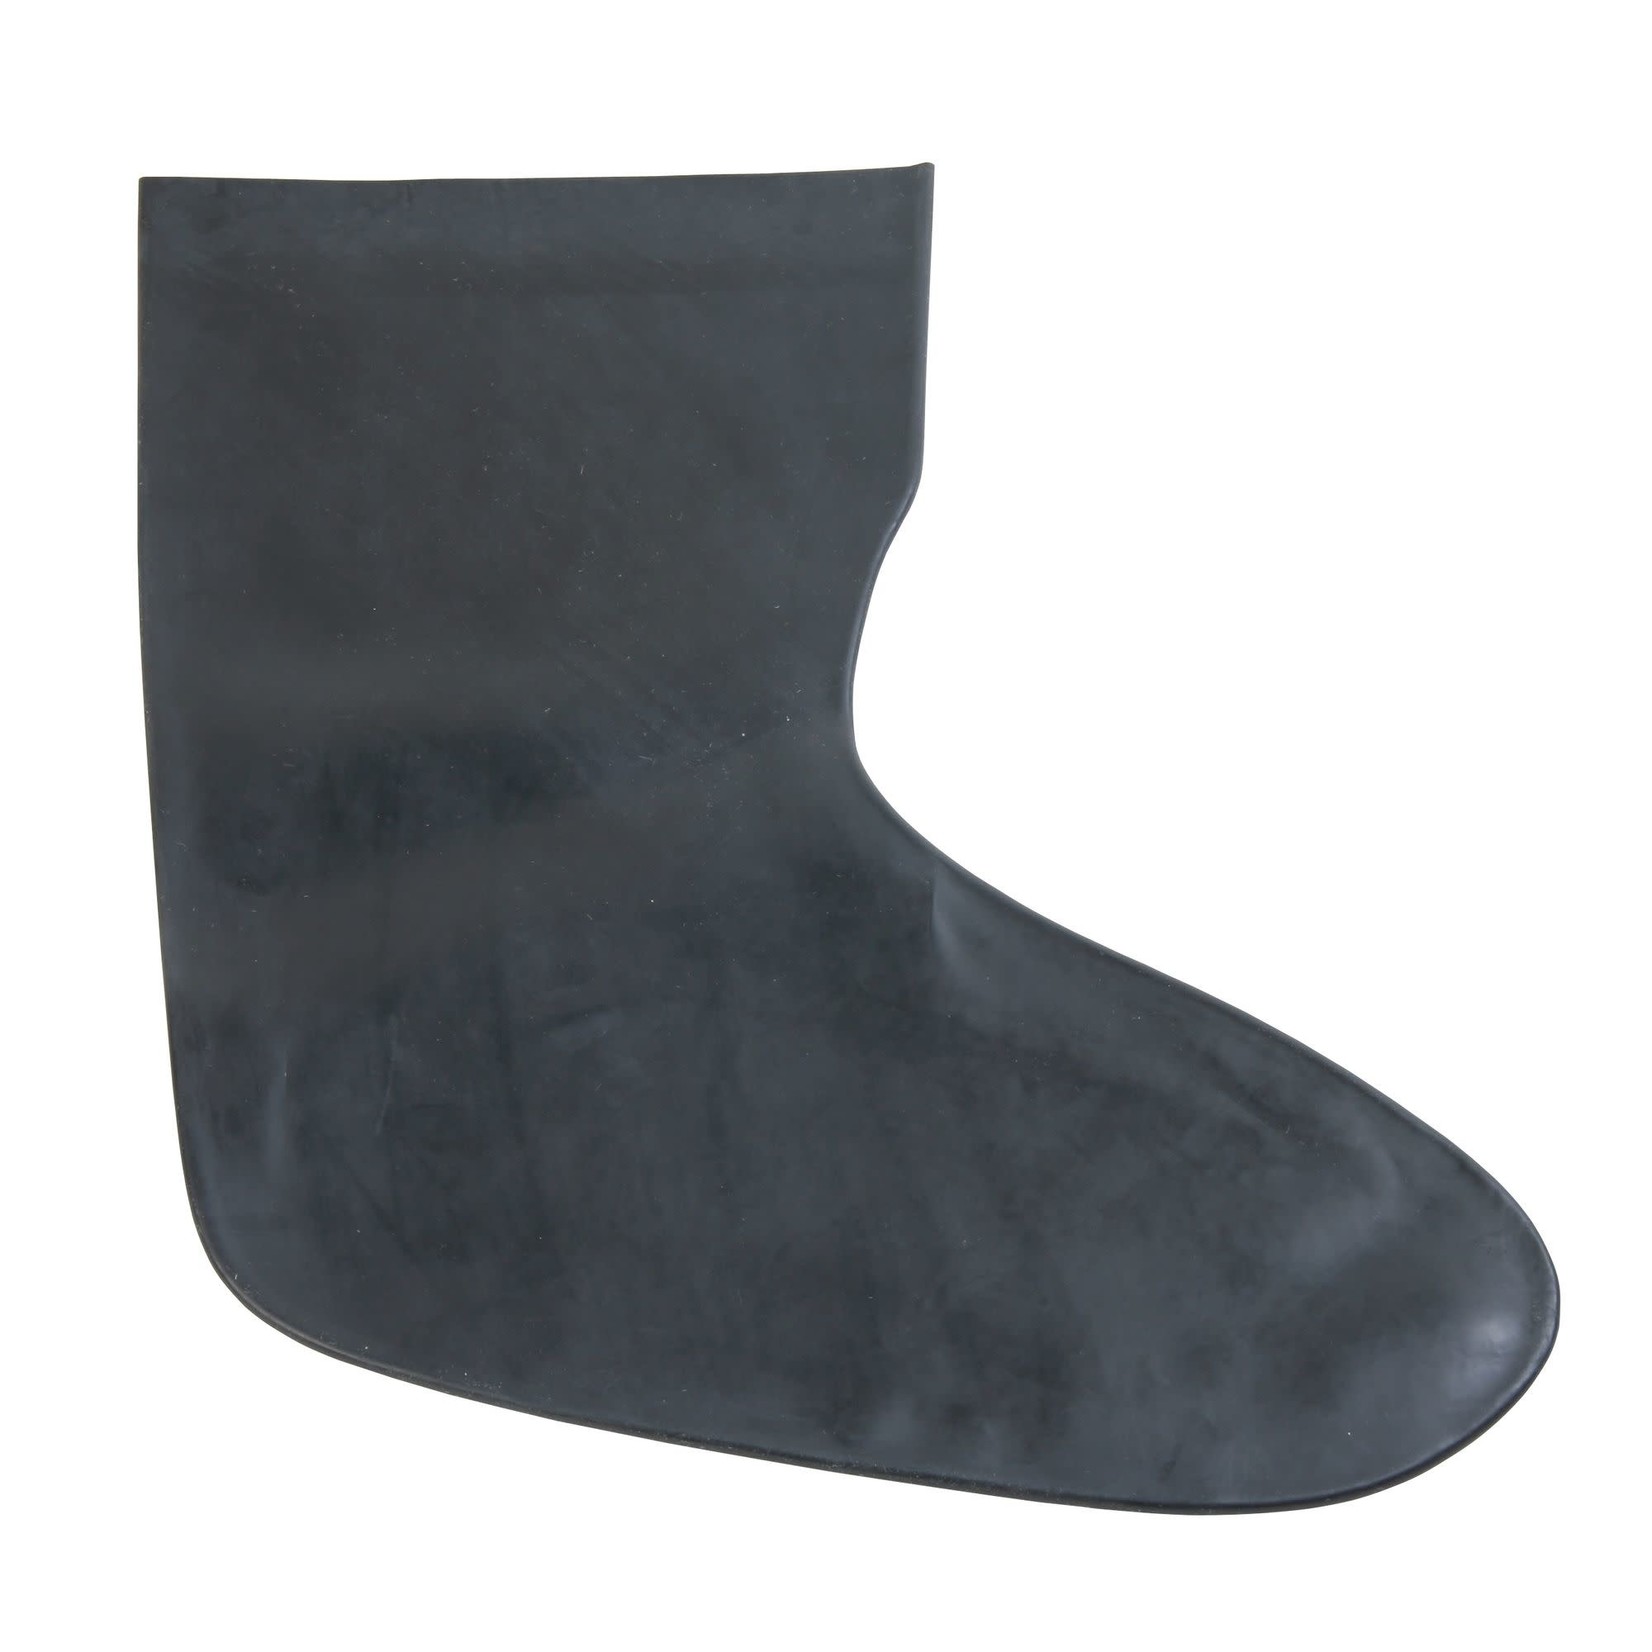 Utah Whitewater Gear UWG Latex Sock Replacement (Single)